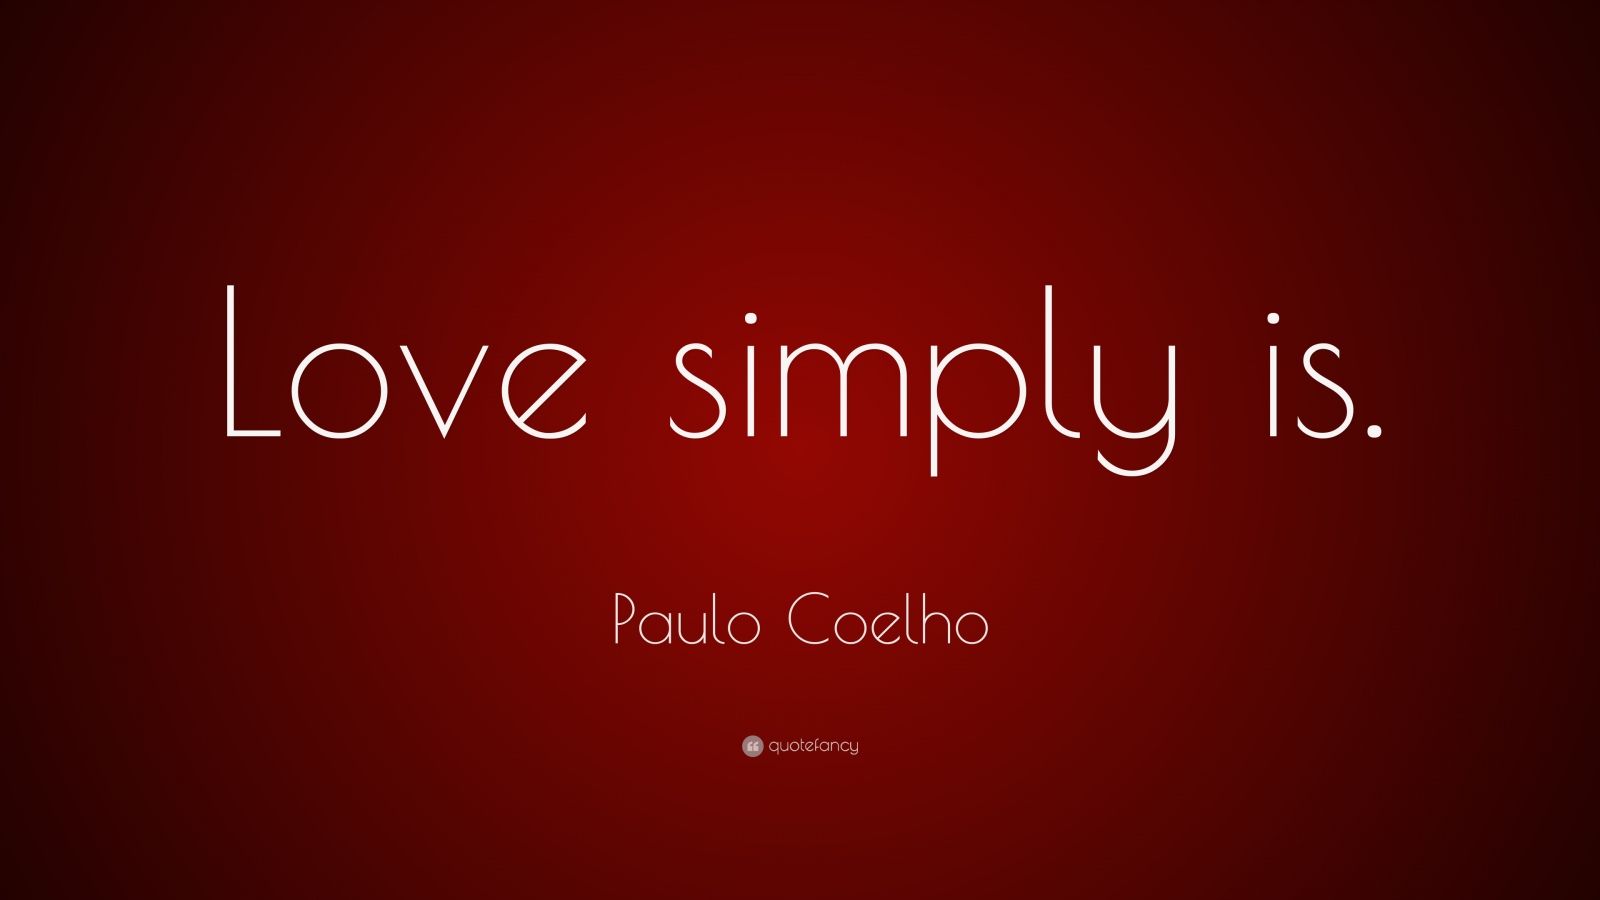 Paulo Coelho Quotes (28 wallpapers) - Quotefancy